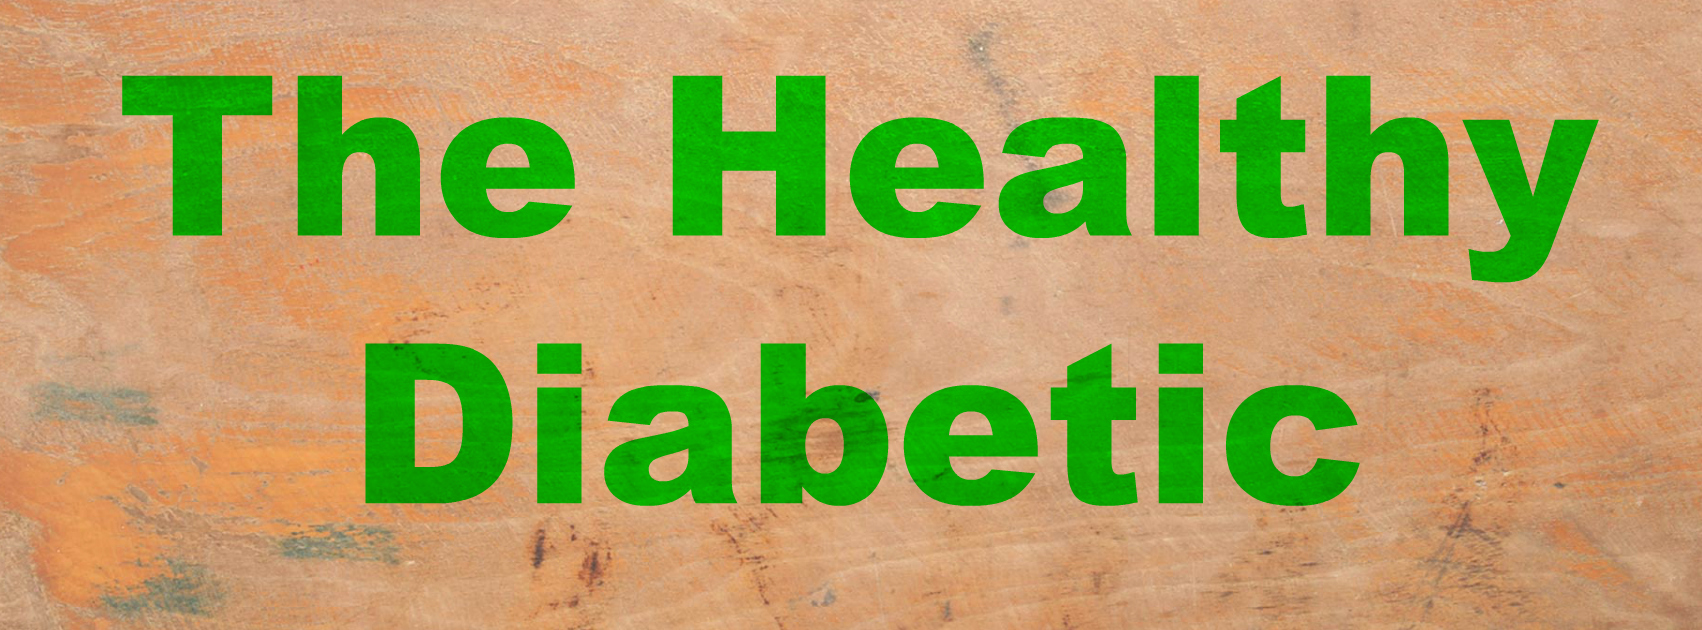 Helping Diabetics Live Their Healthiest!